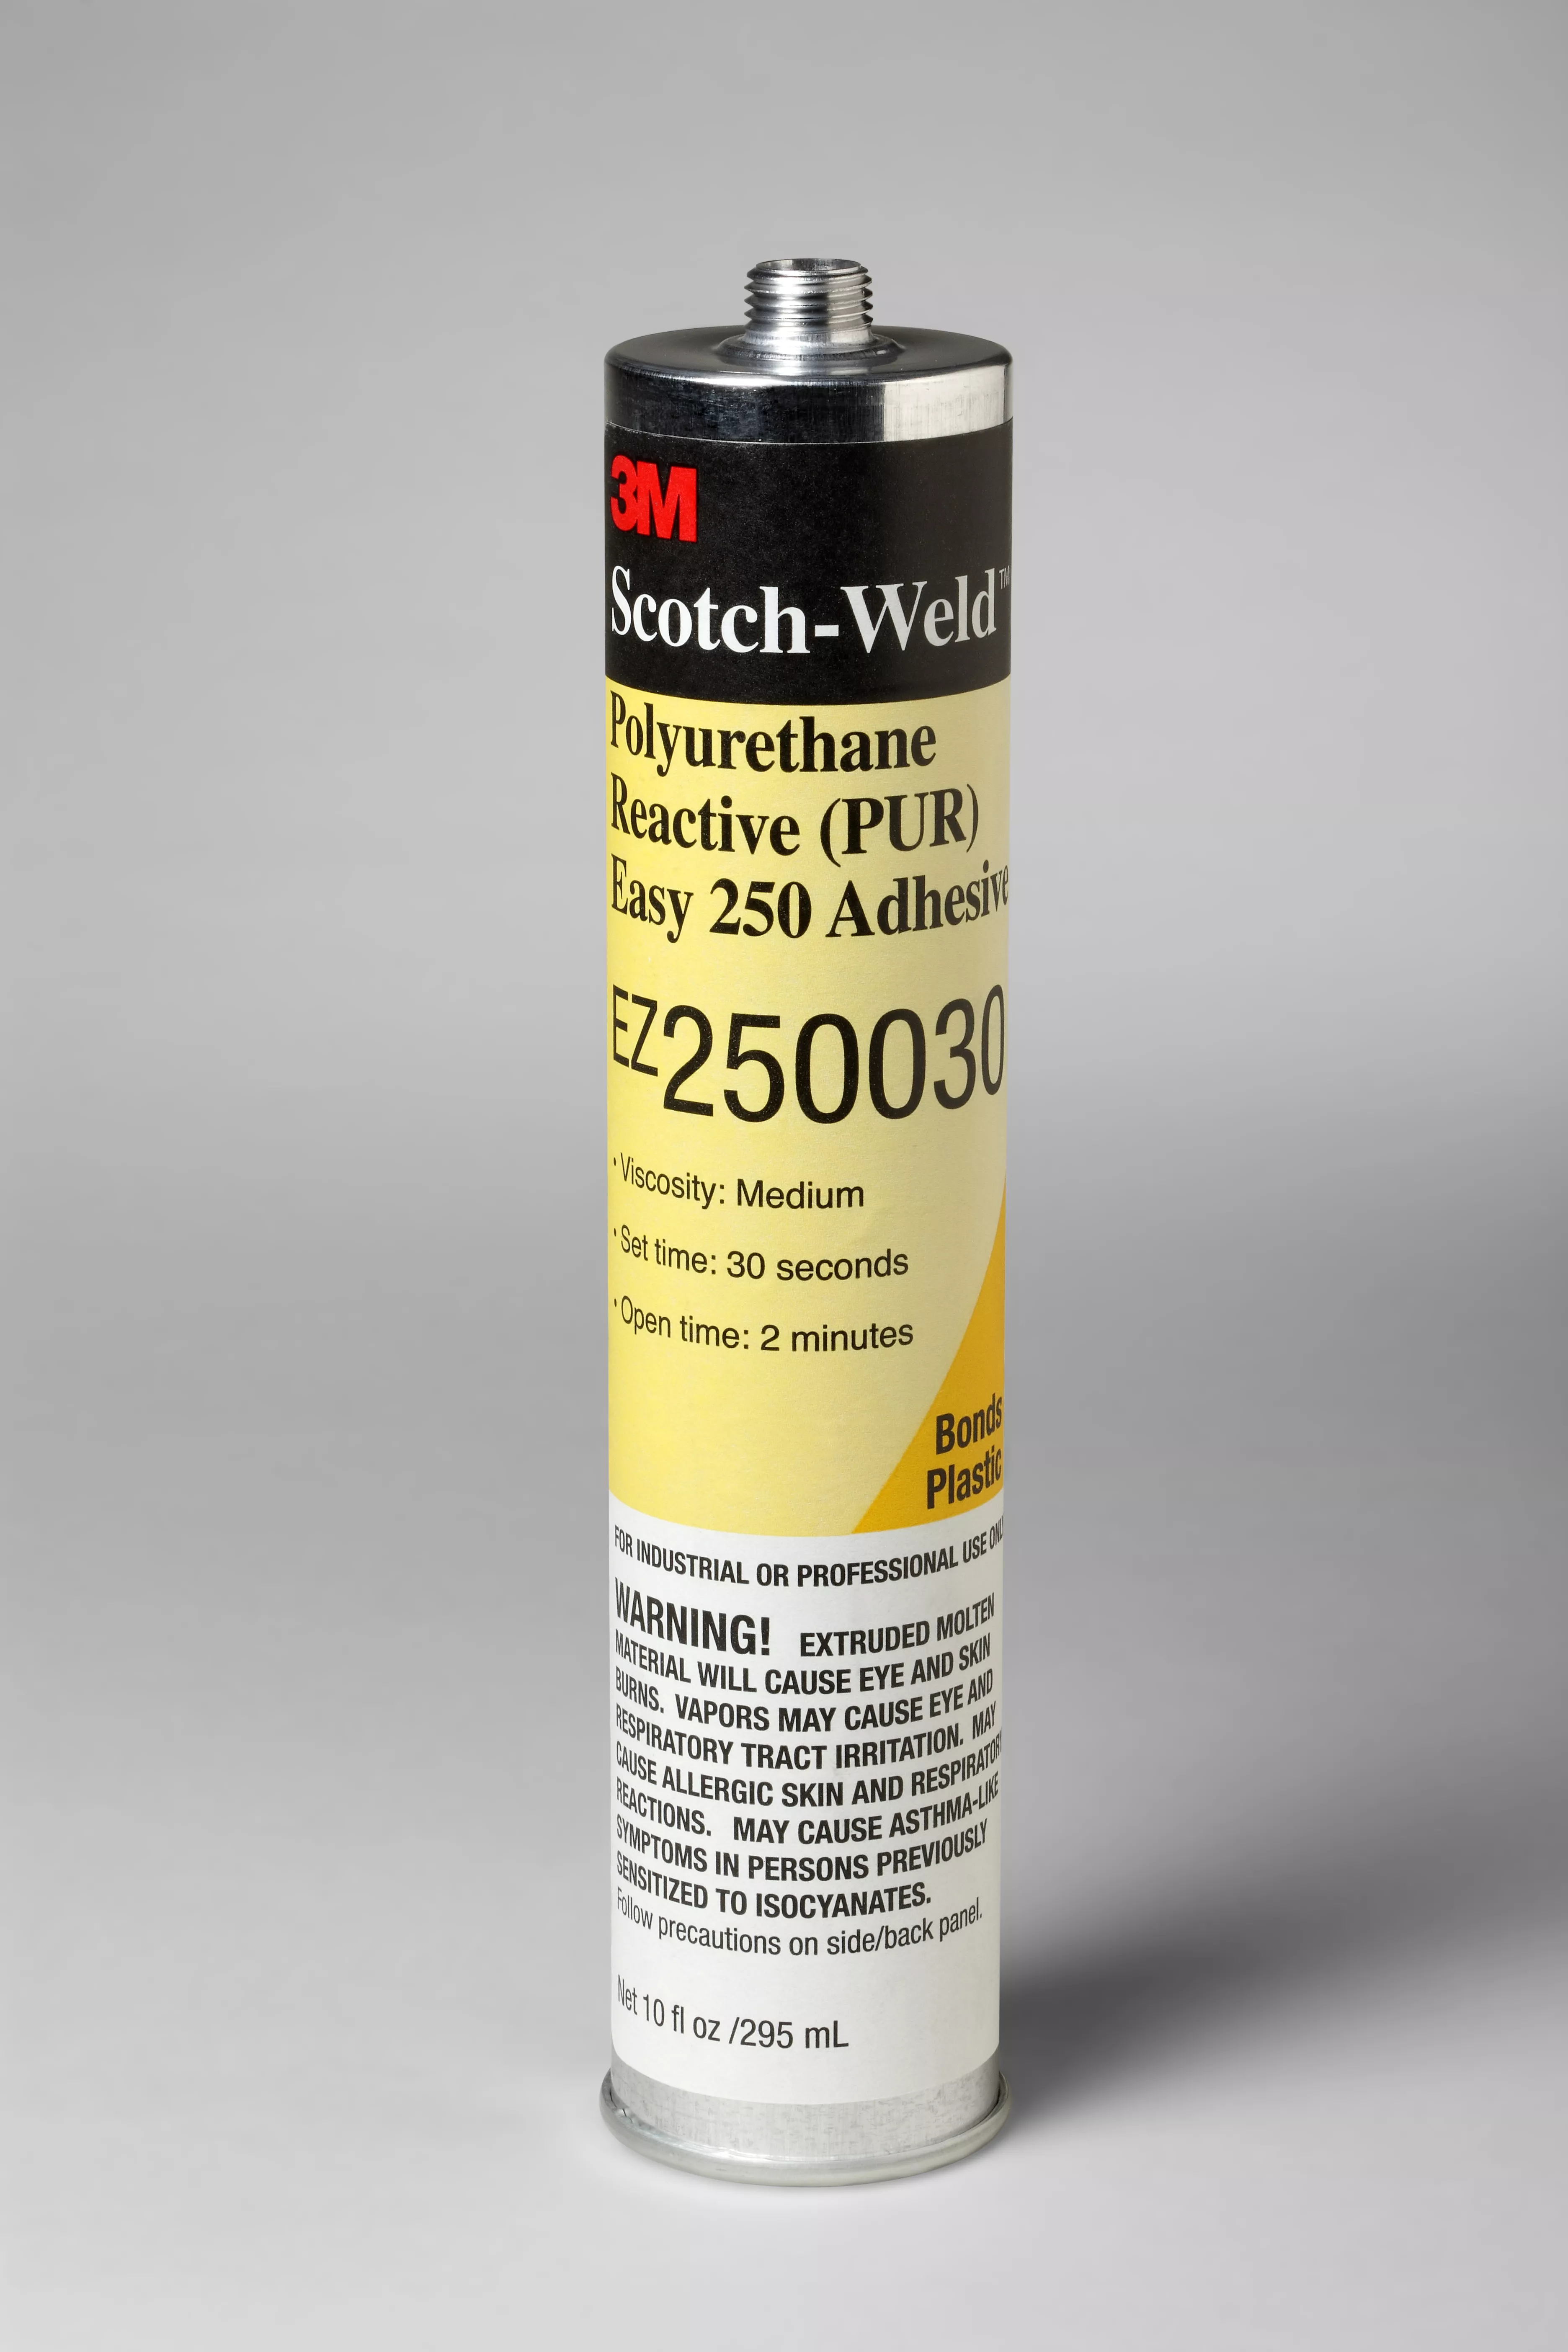 3M™ Scotch-Weld™ PUR Adhesive EZ250030, Off-White, 1/10 Gallon Cartidge,
5 Each/Case